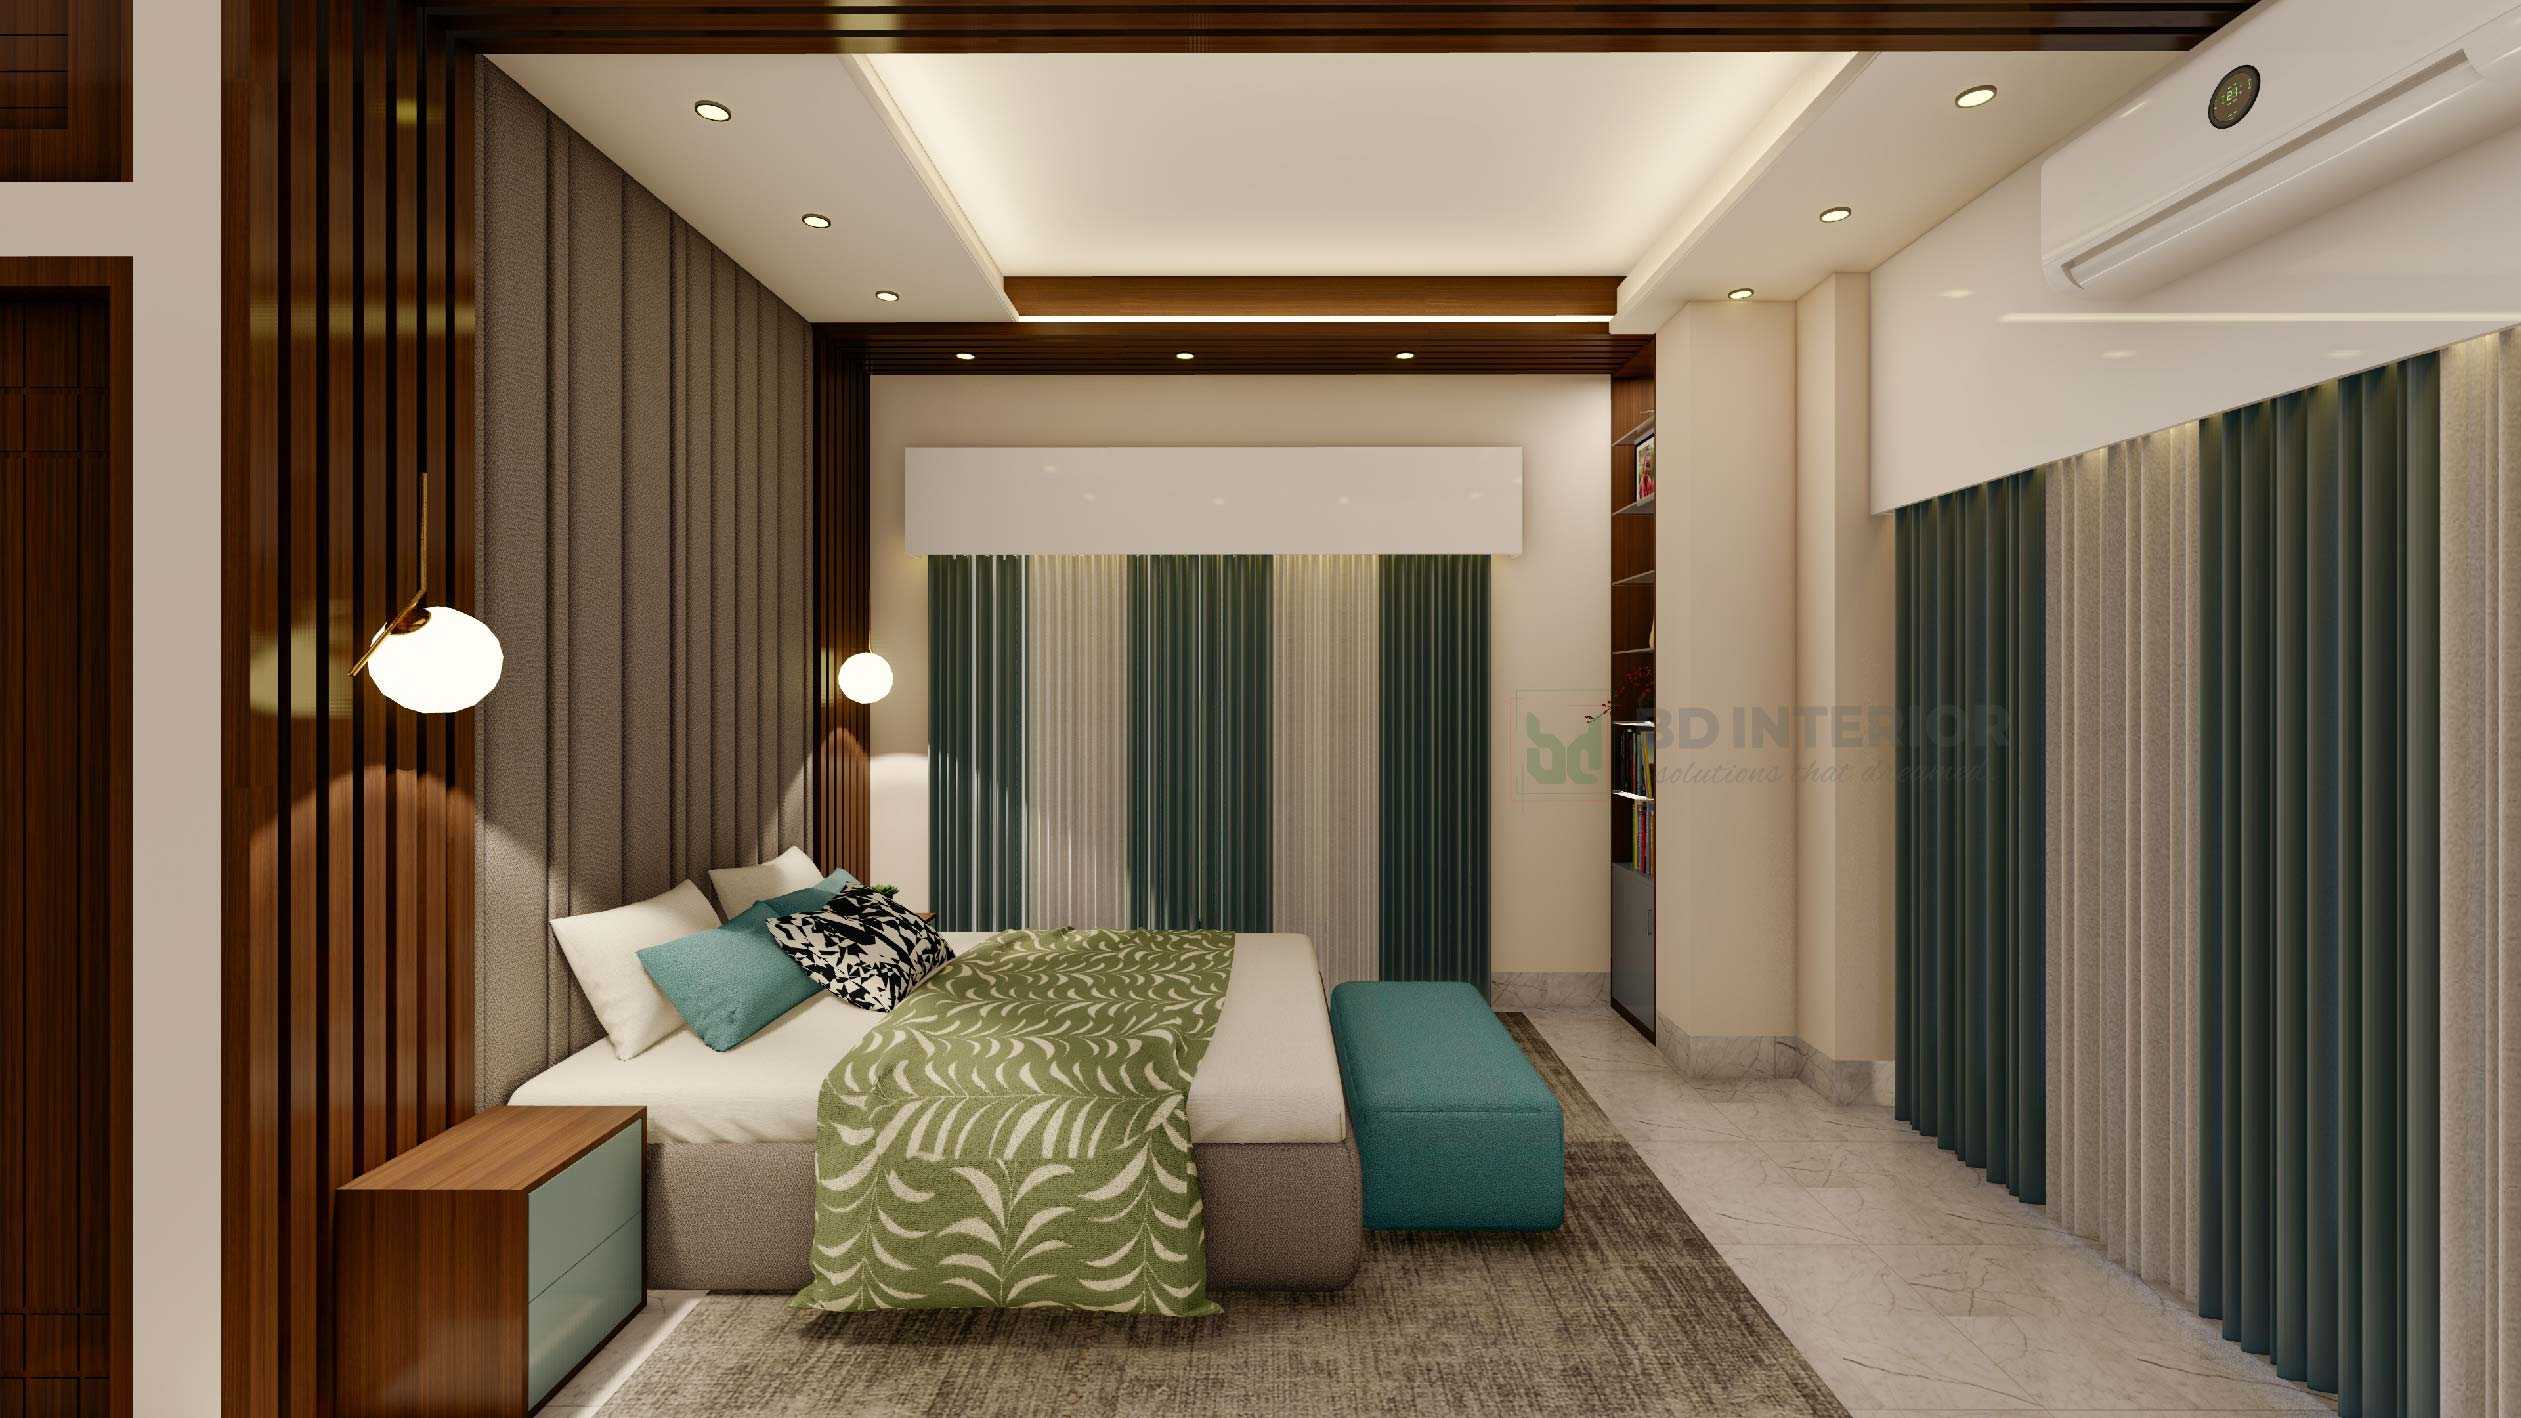 master bedroom interior design in bd